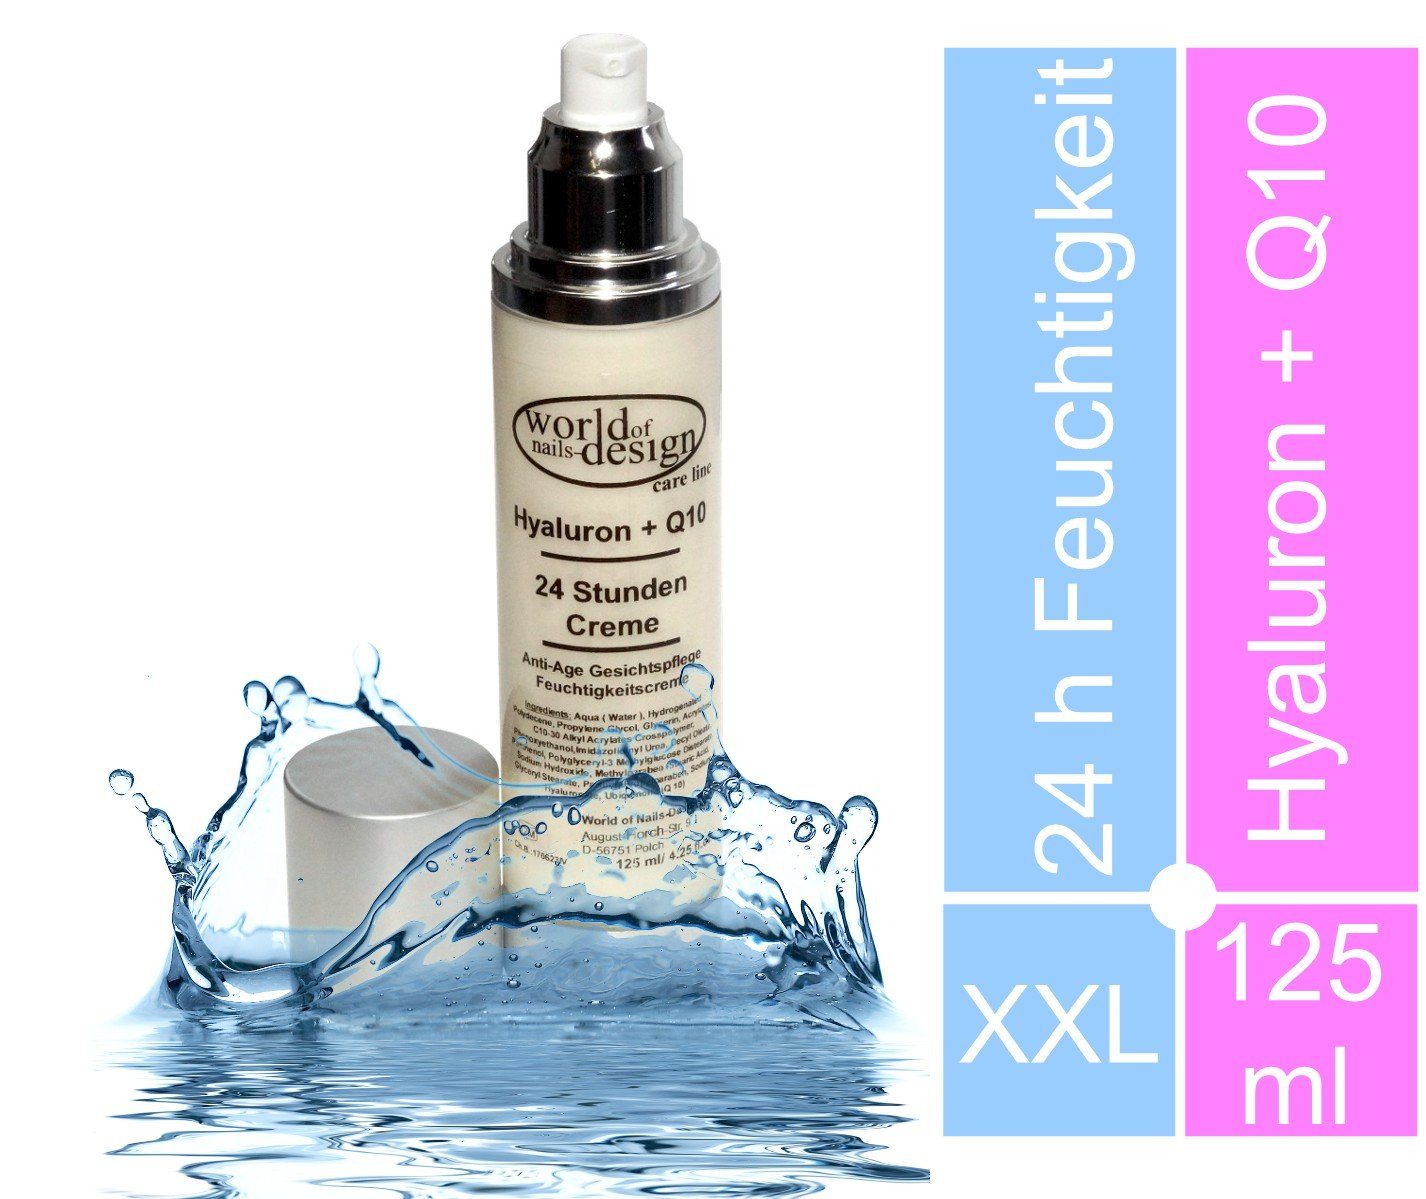 World of Nails-Design Feuchtigkeitscreme 24 Stunden Creme Hyaluron + Q10, Anti-Aging